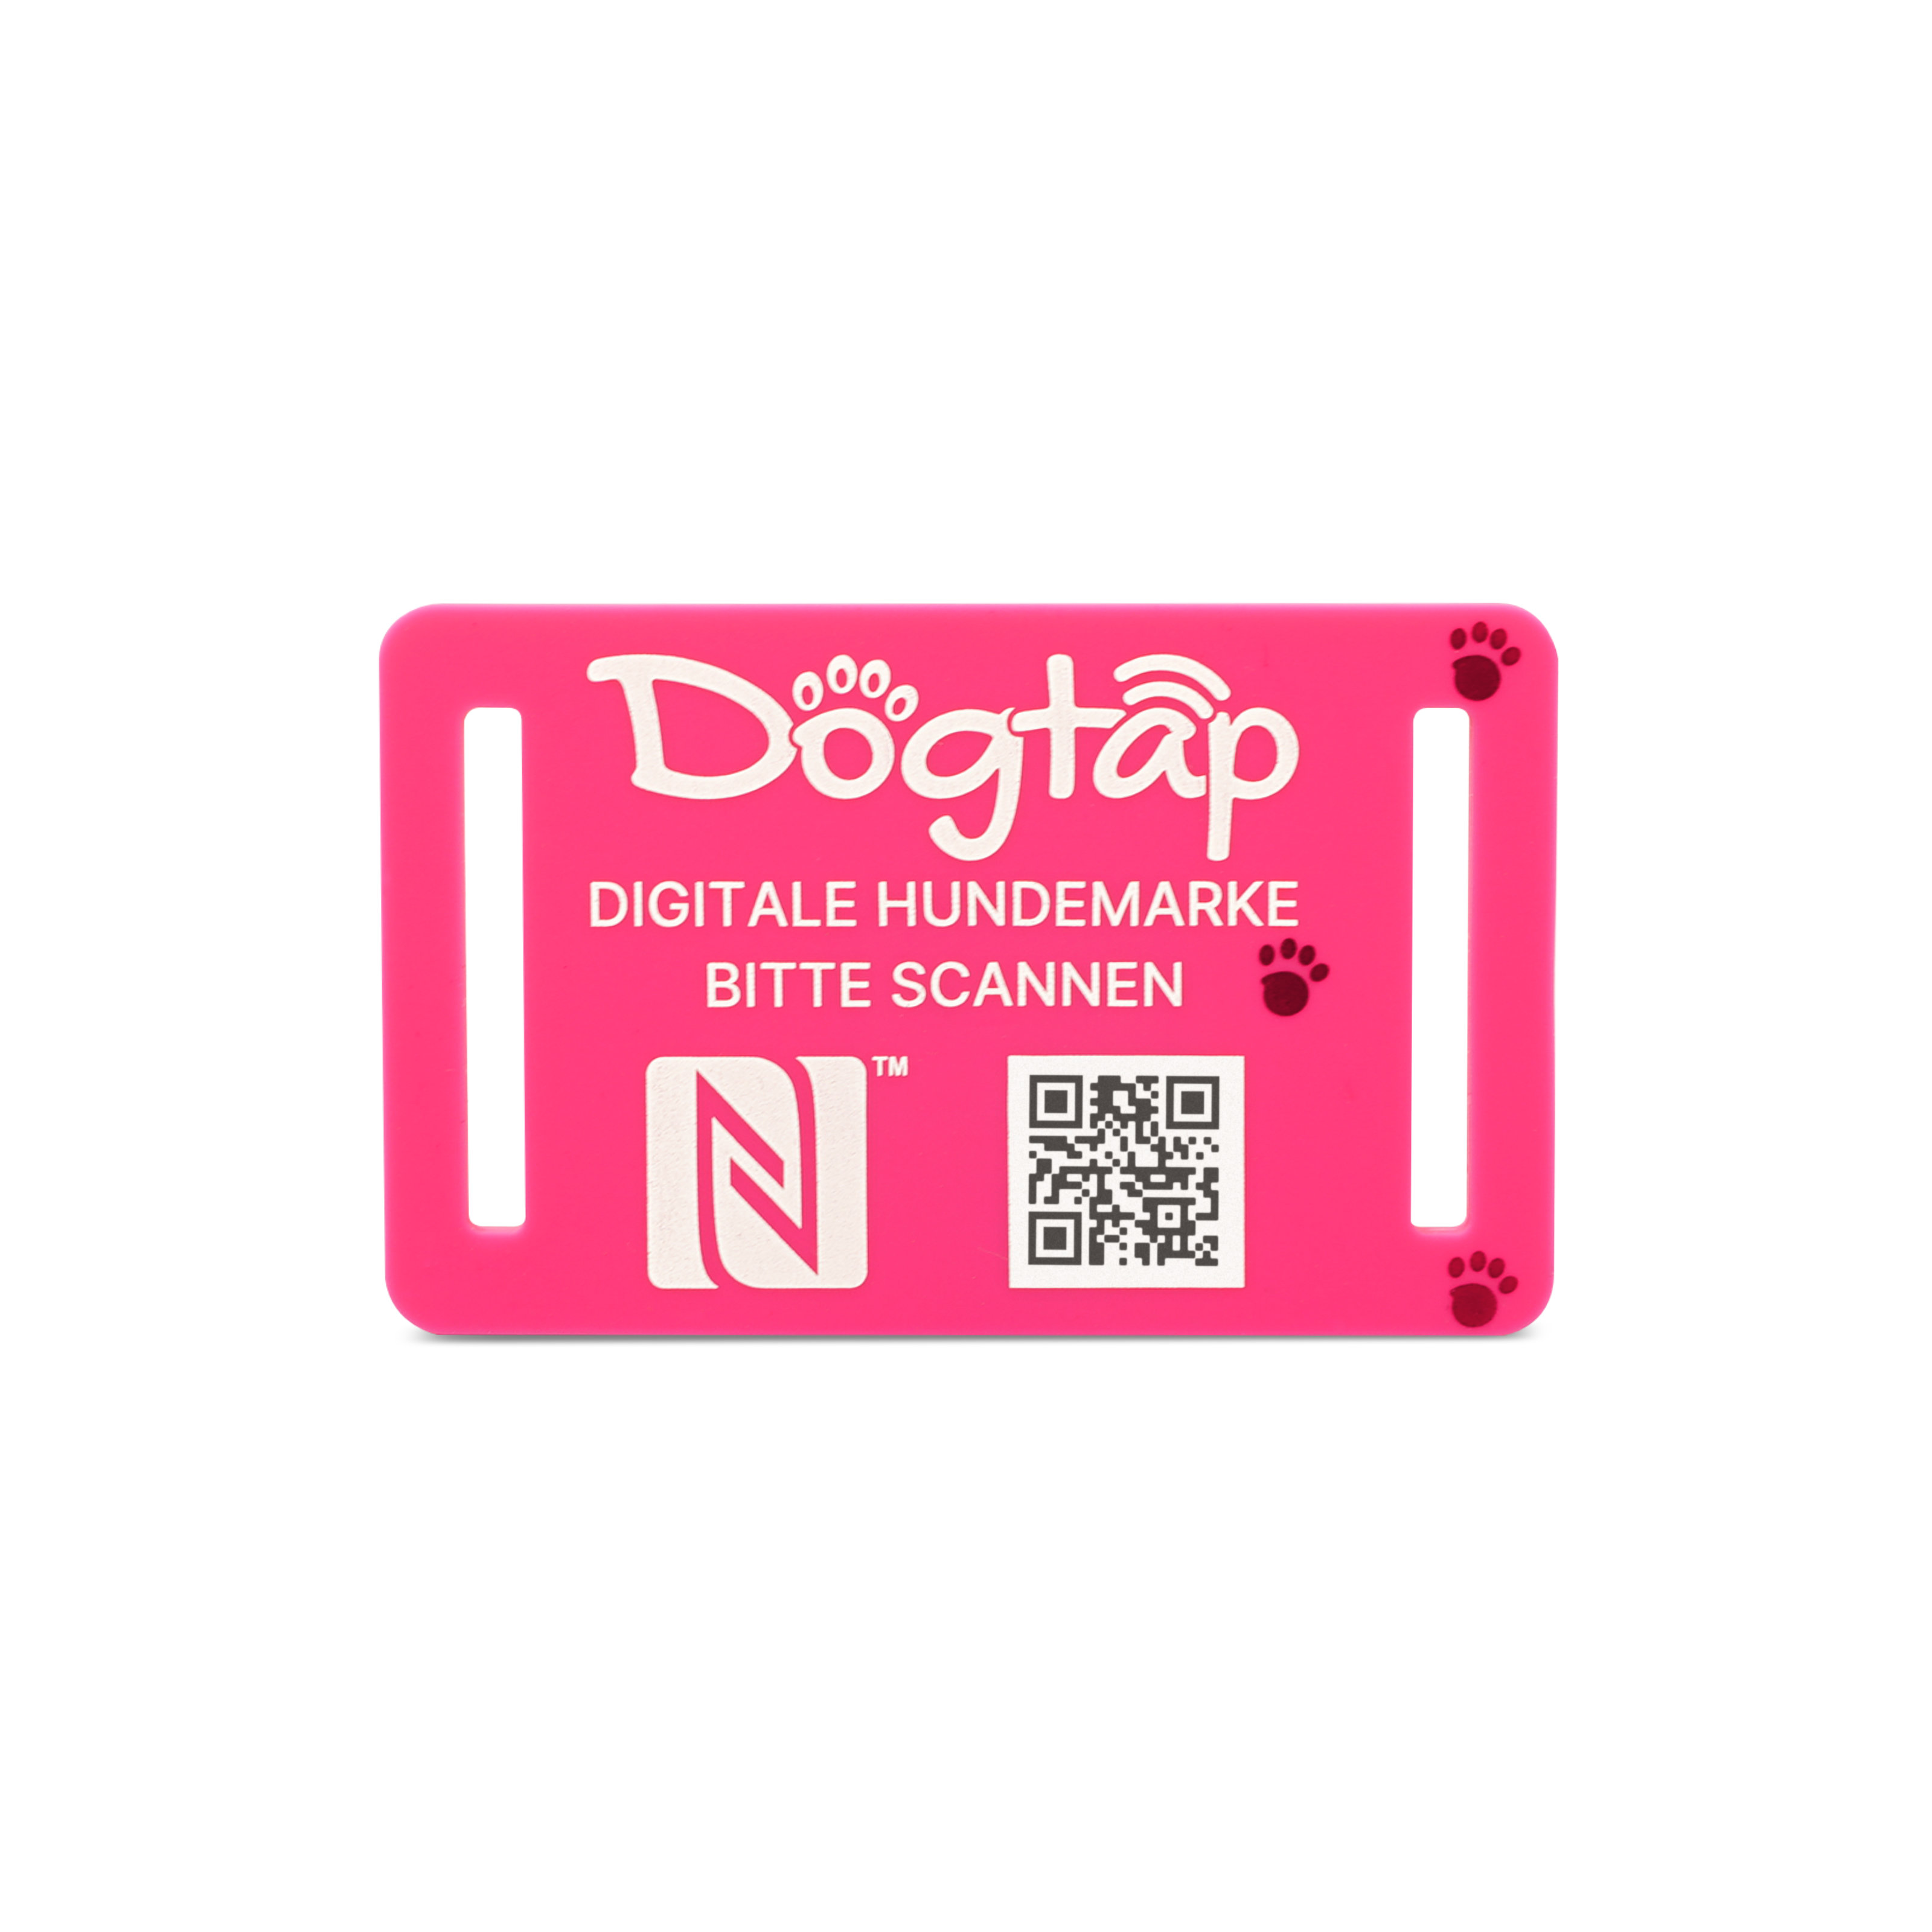 Dogtap Light Big - Digitale Hundemarke - Silikon - 67 x 40 mm - pink